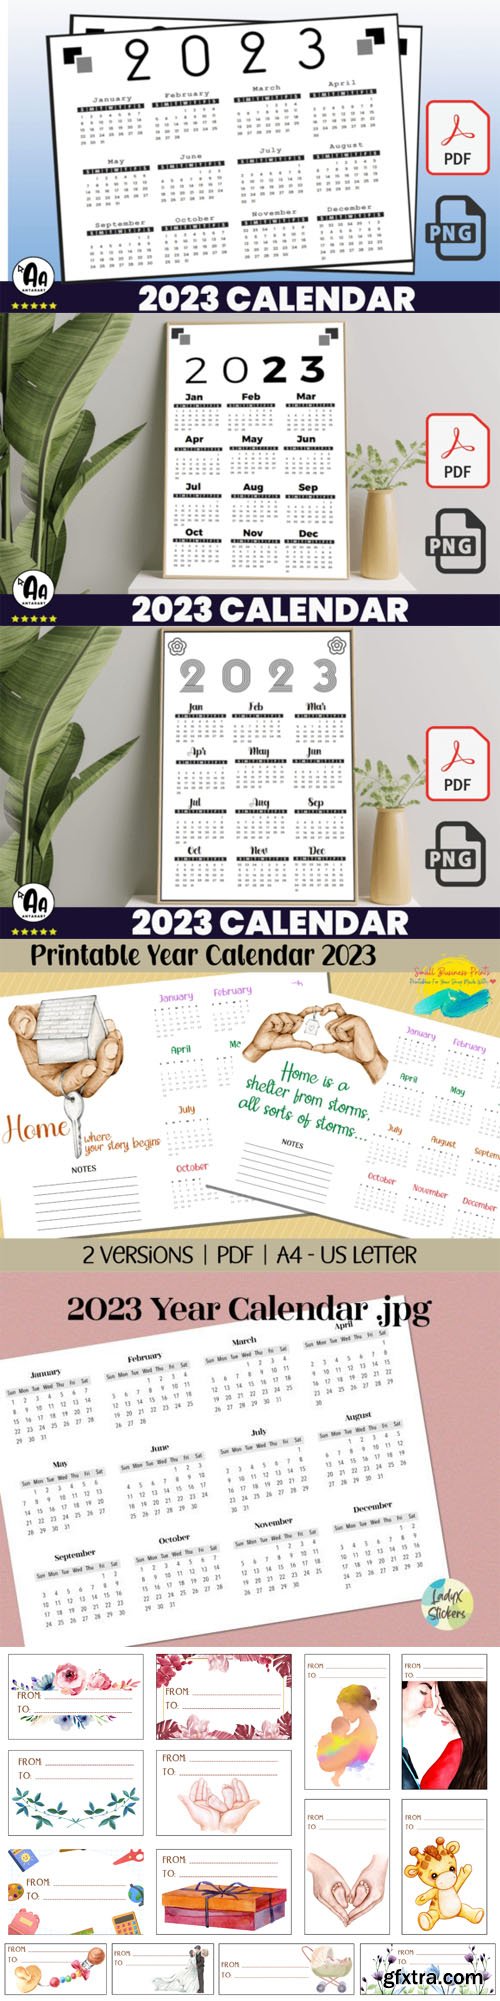 Printable Calendars 2023 Collection + Watercolor Gift Tags [Bonus]